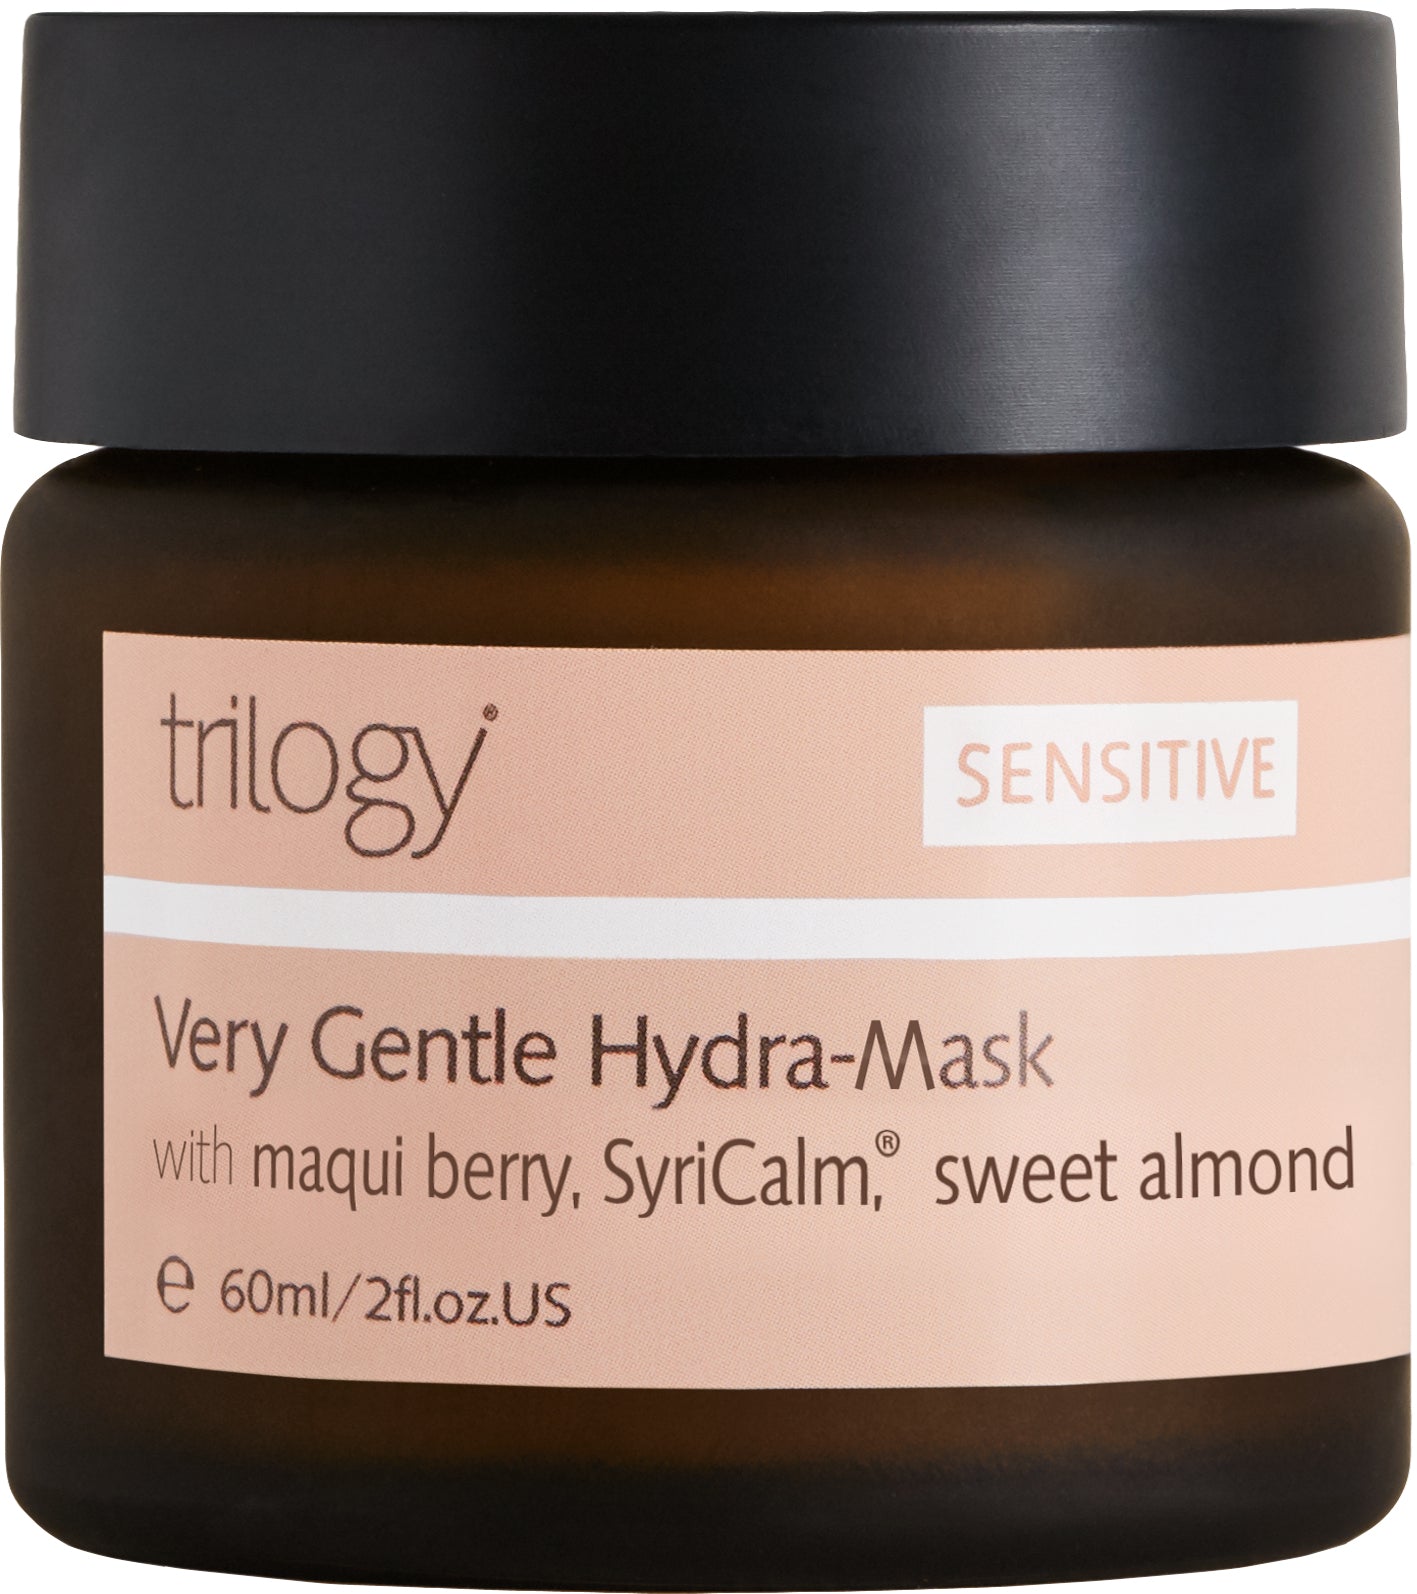 Trilogy very gentle hydra mask 60ml, Leahys pharmacy